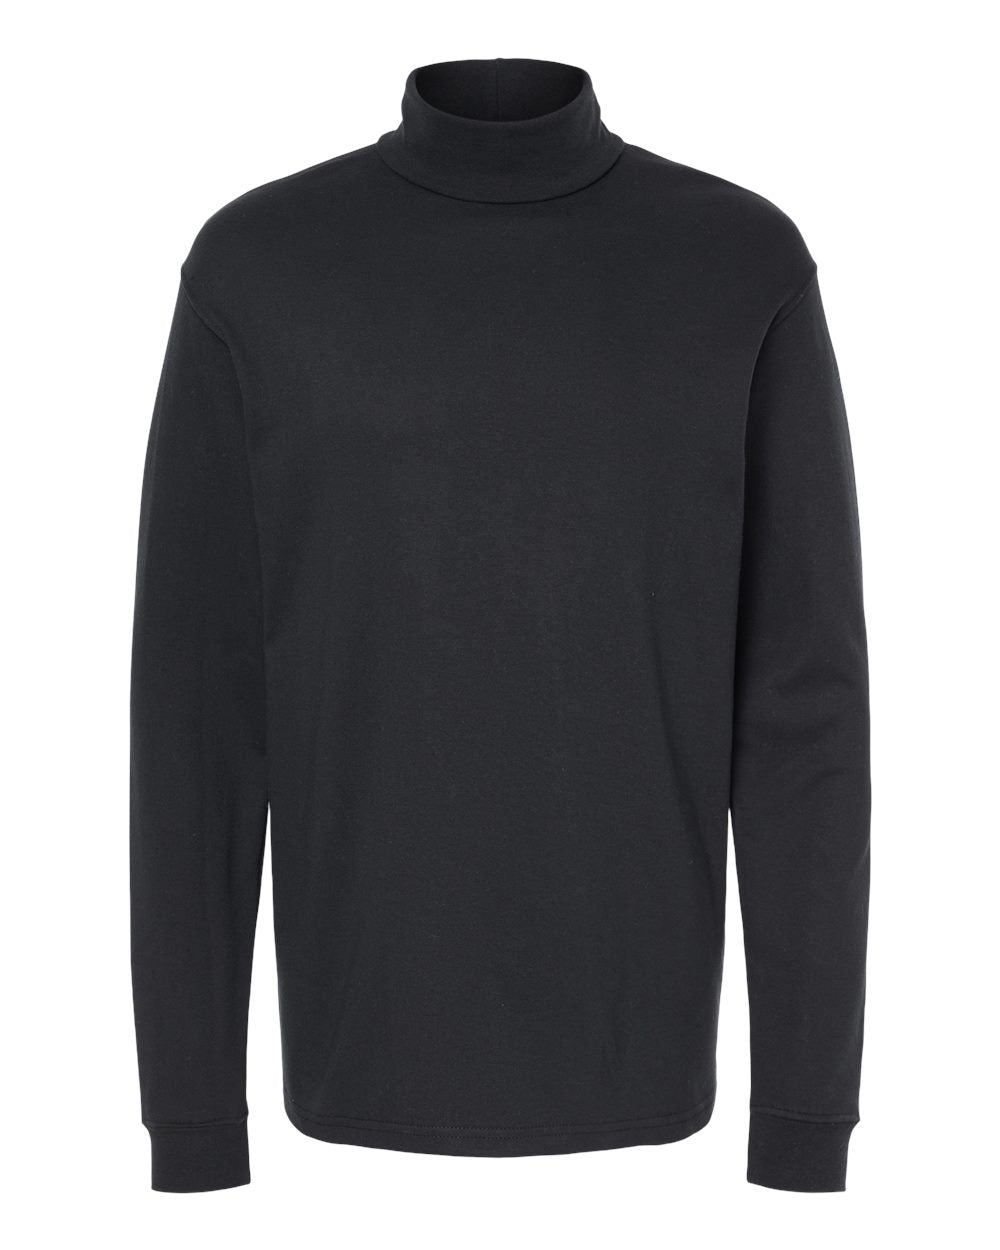 King Fashion Interlock Turtleneck Long Sleeve T-Shirt KF4900 #color_Black